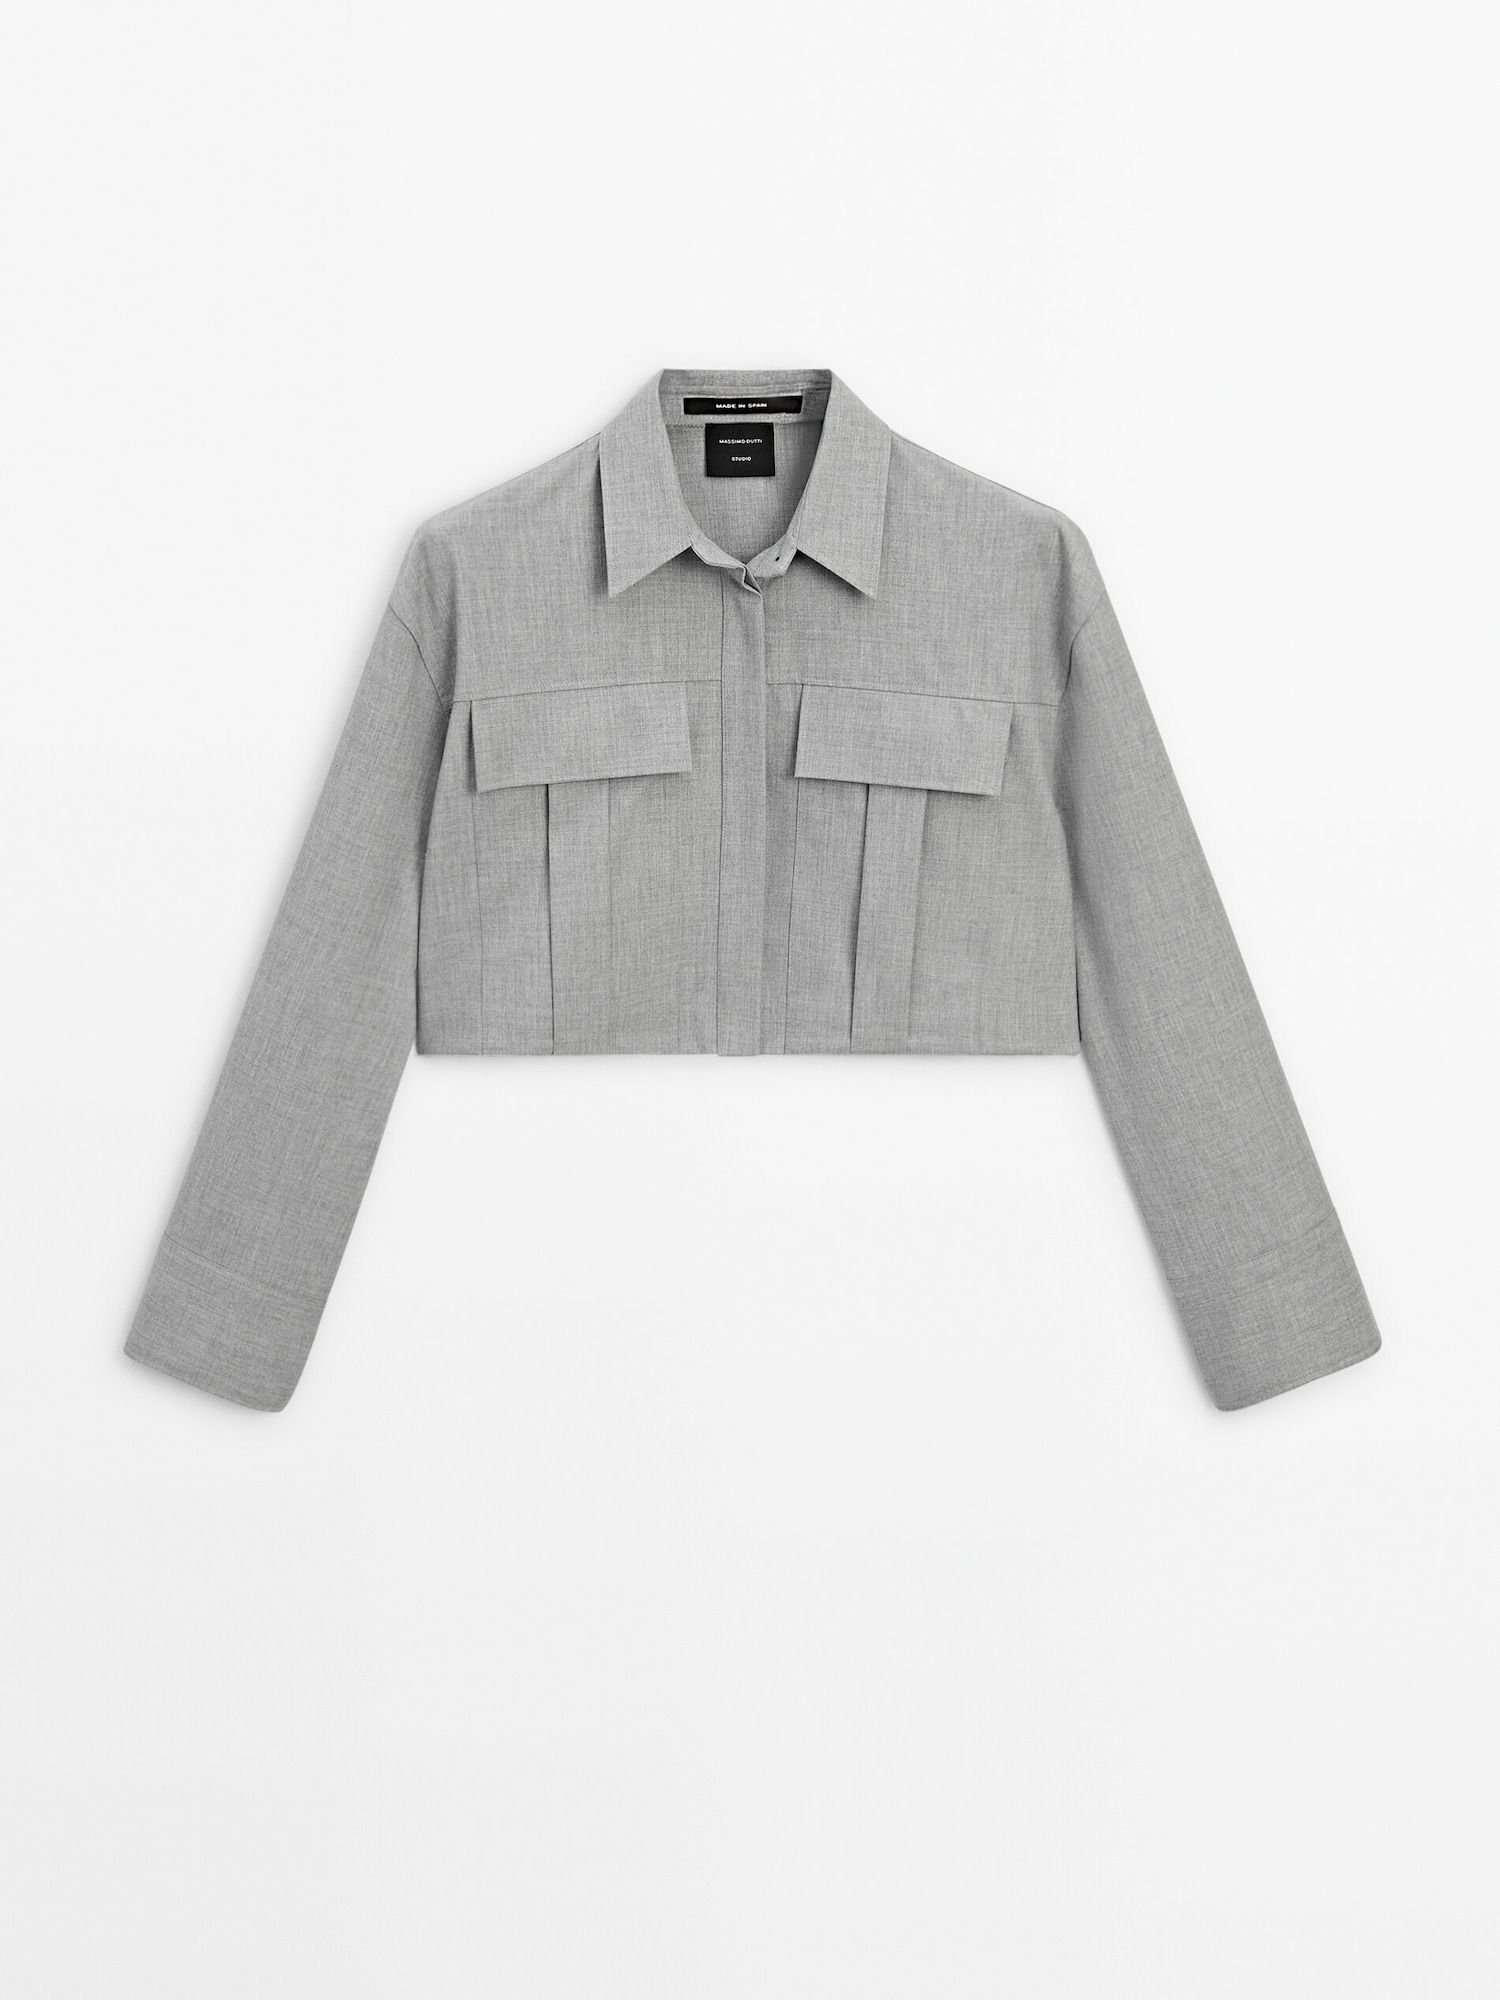 Cropped shirt with pockets - Studio | Massimo Dutti (US)